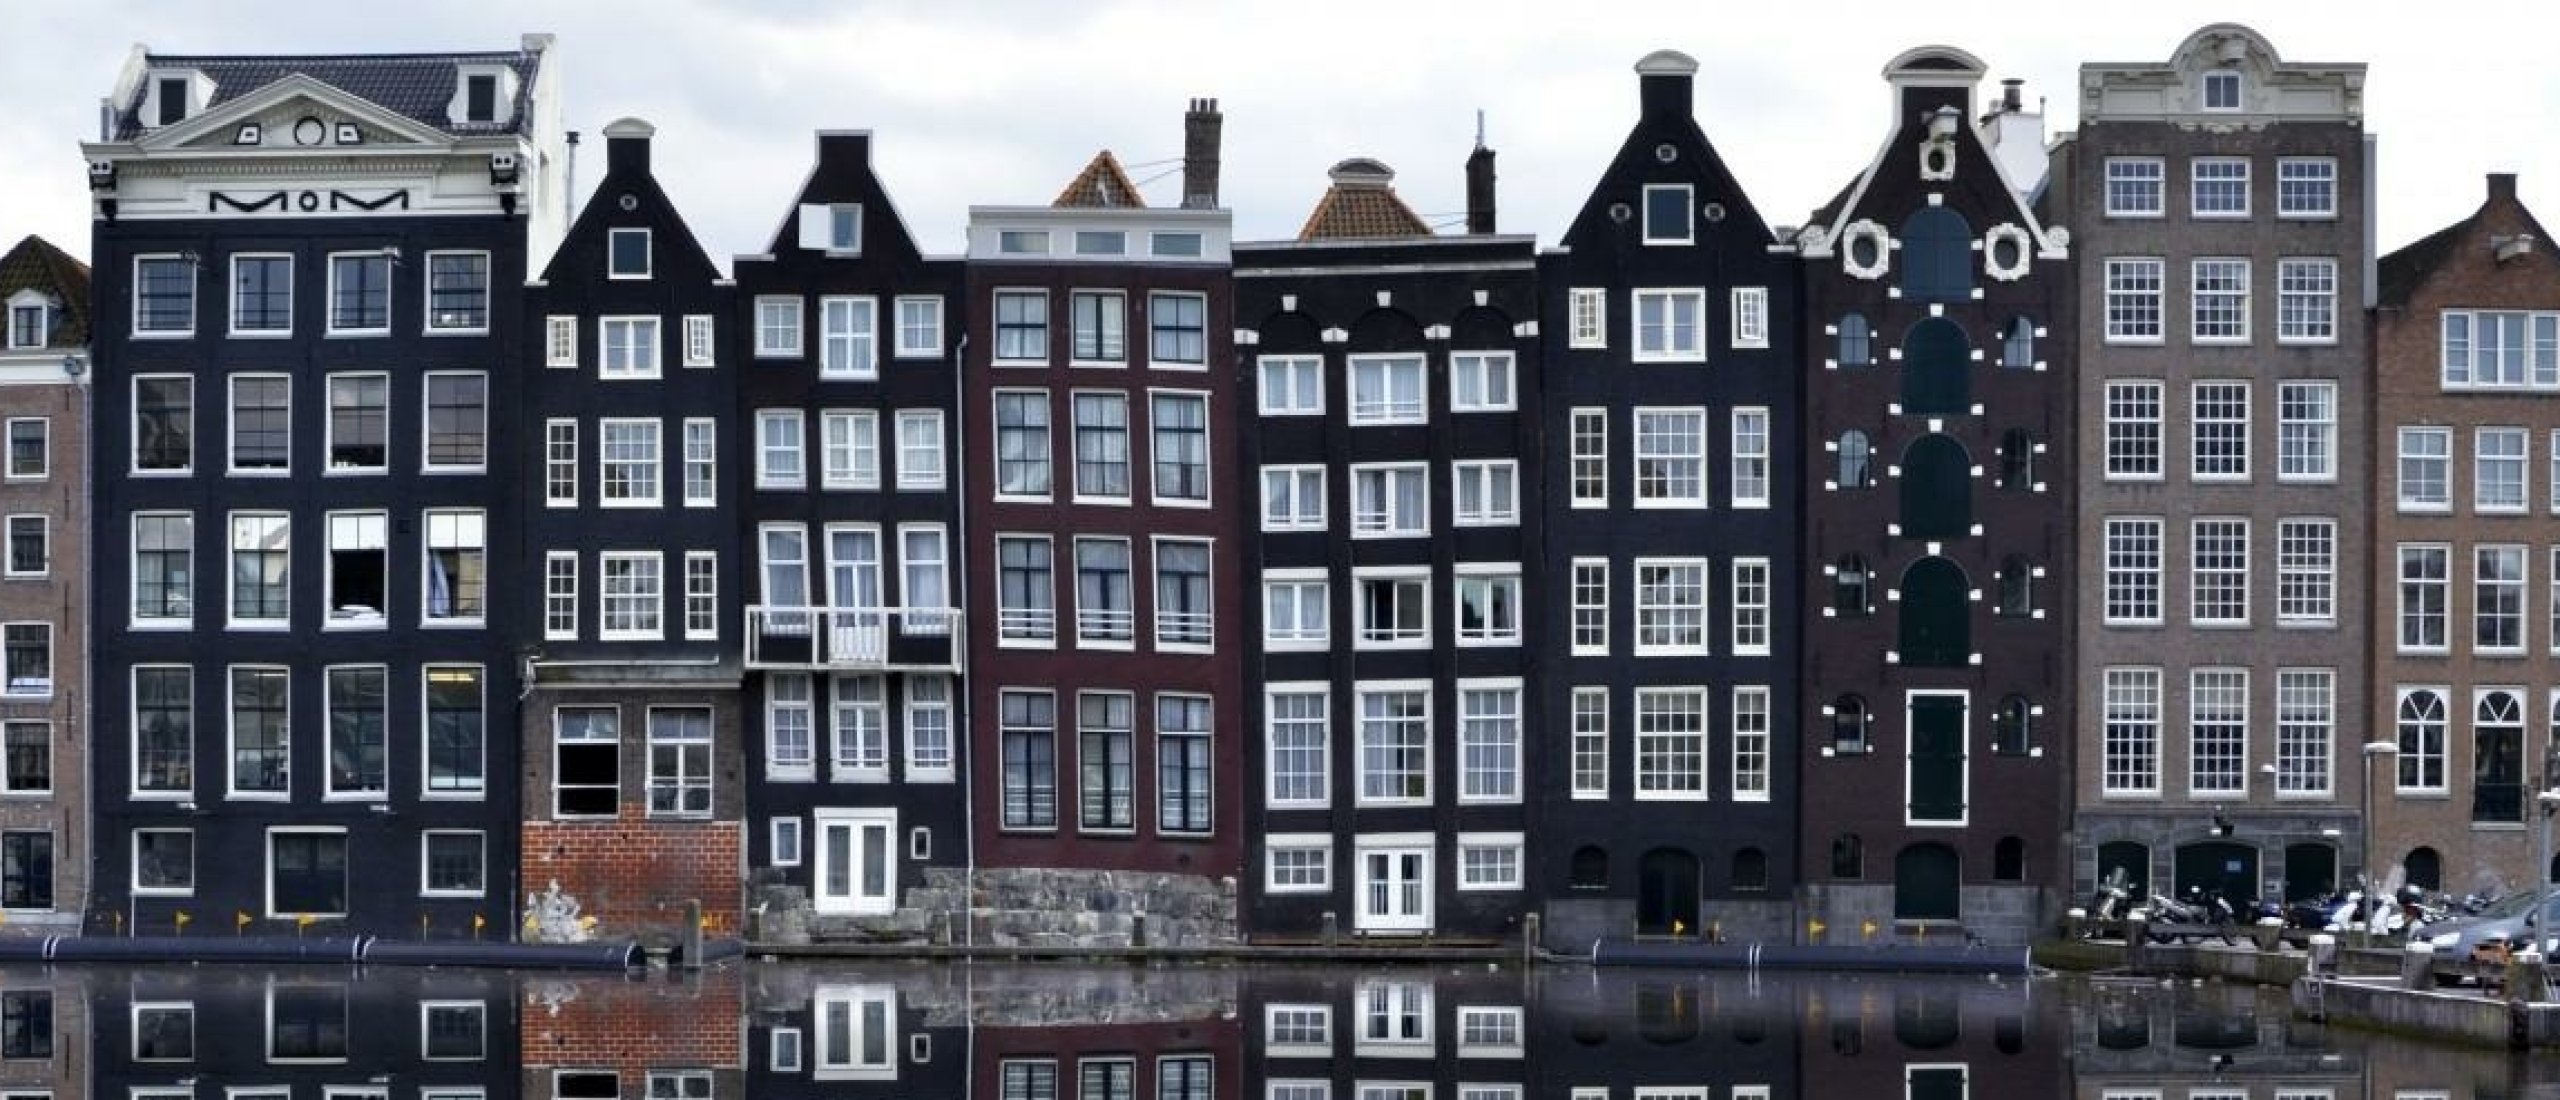 6 Reasons to Visit Amsterdam